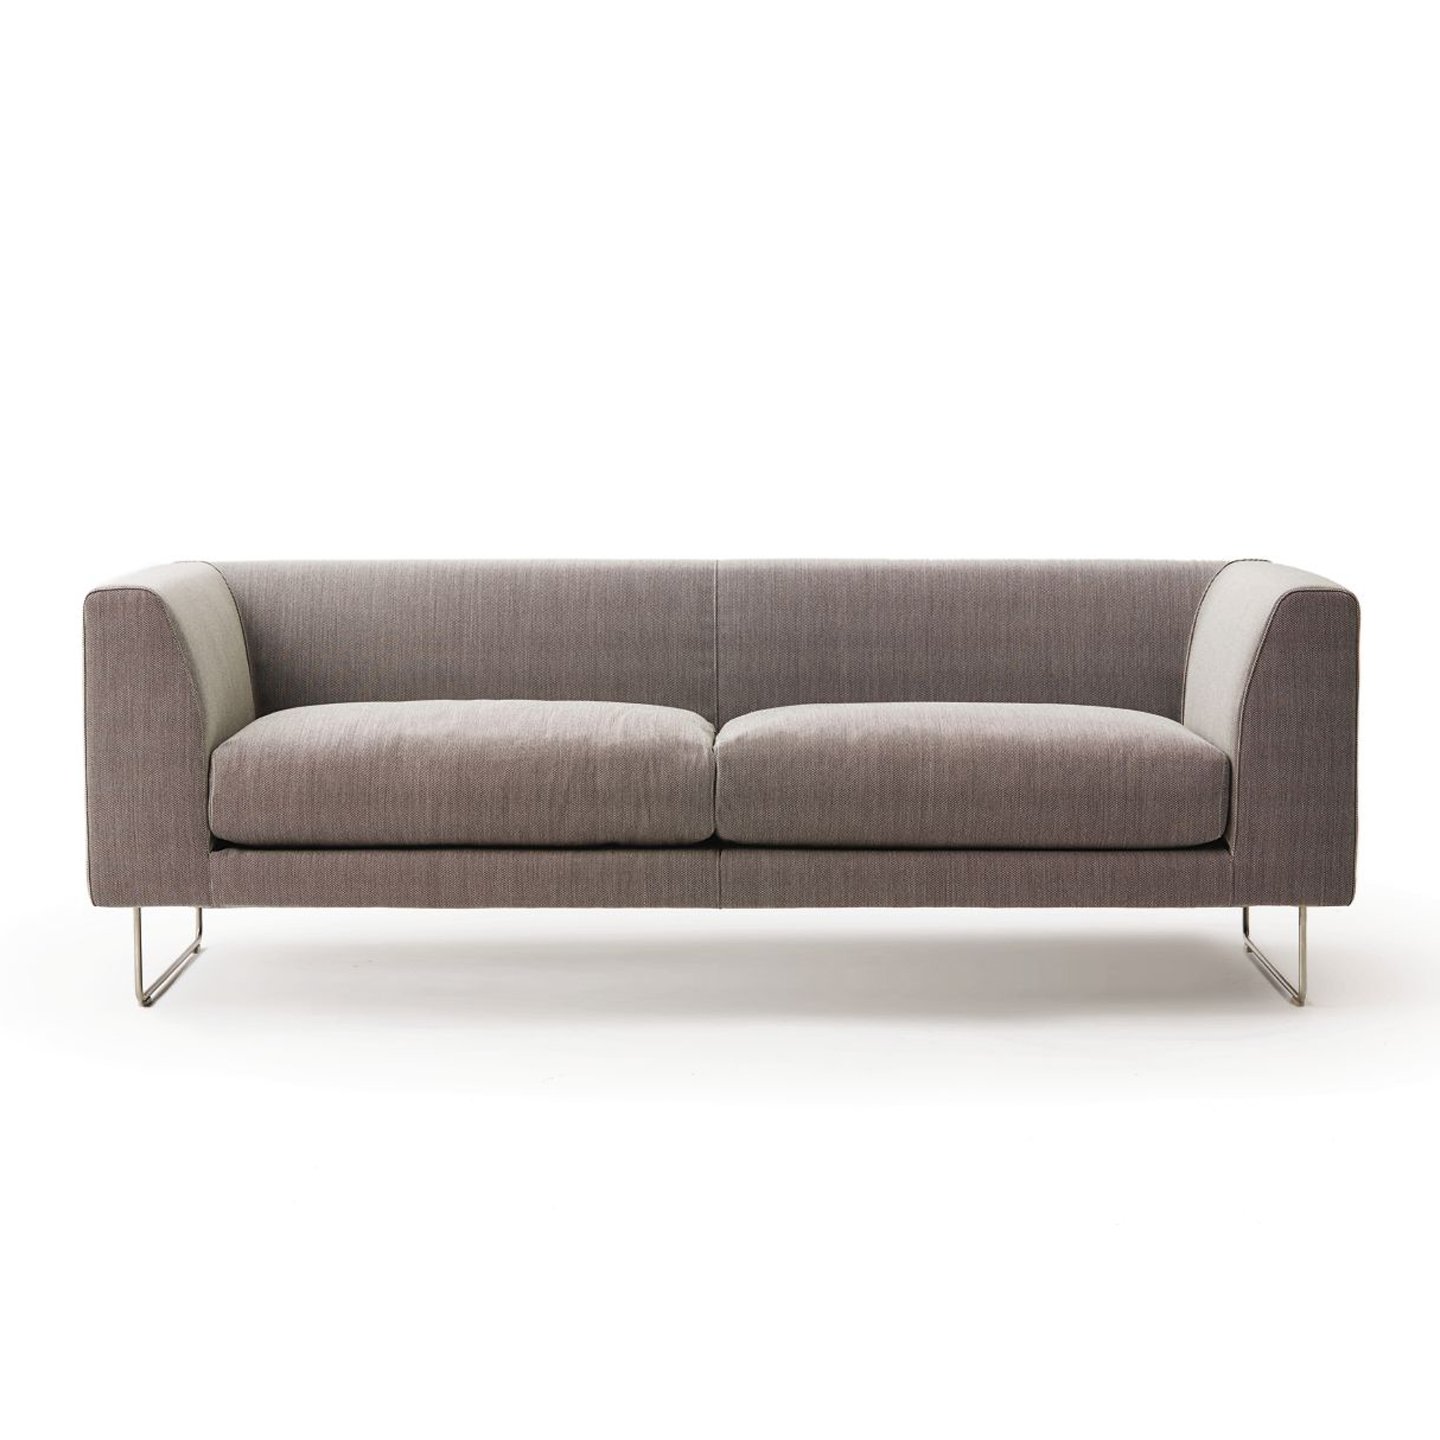 Haworth Elan sofa in grey upholstery